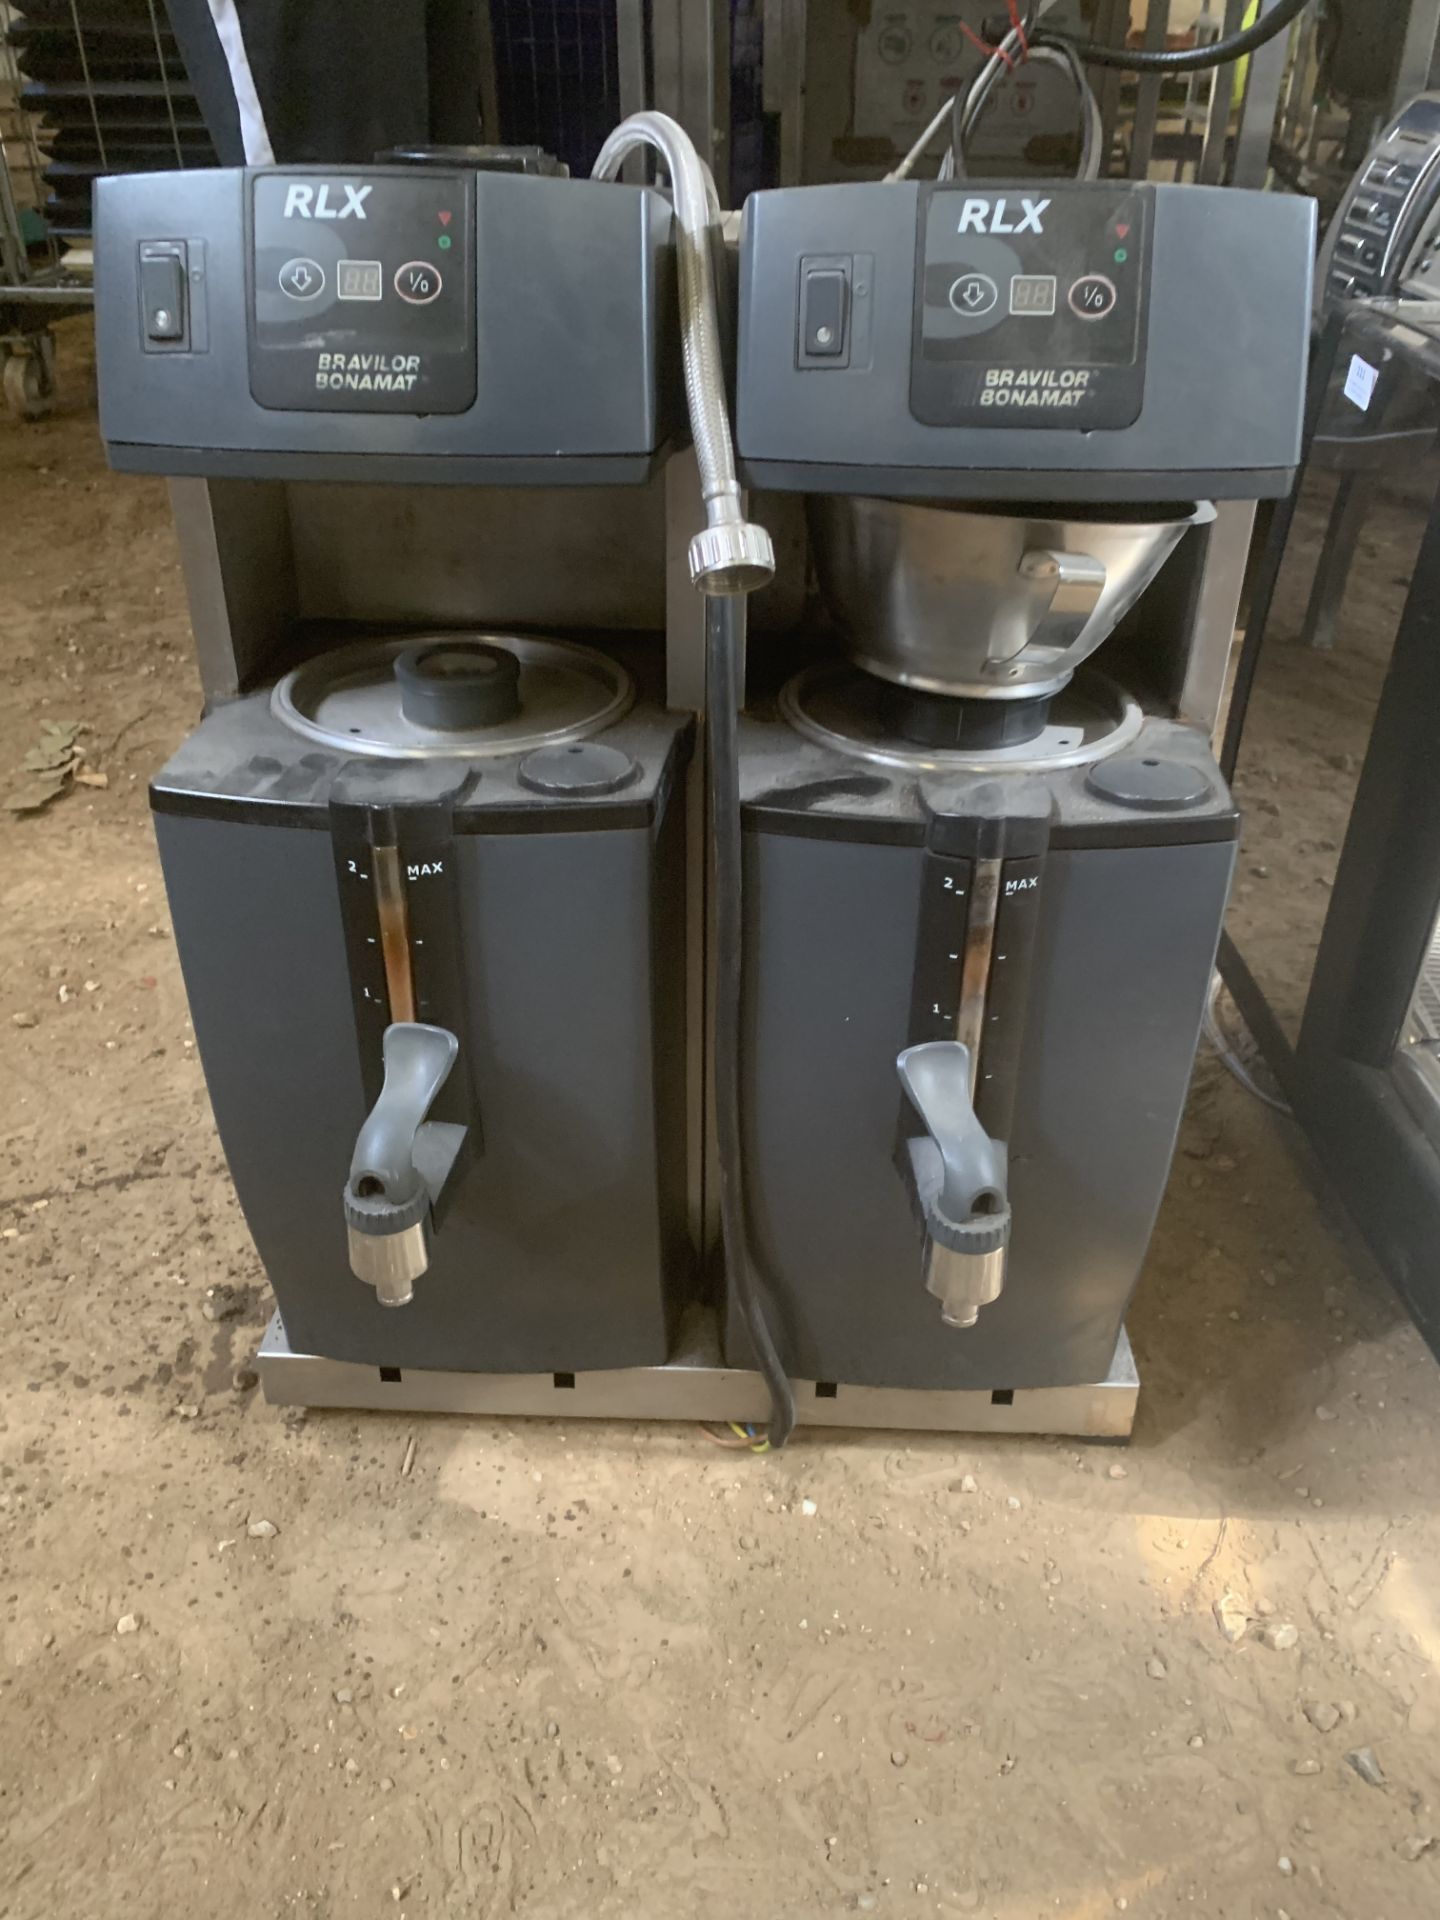 * RLX Braviloir bonamat double brewing system coffee machine w x 705 d x 509 h 611